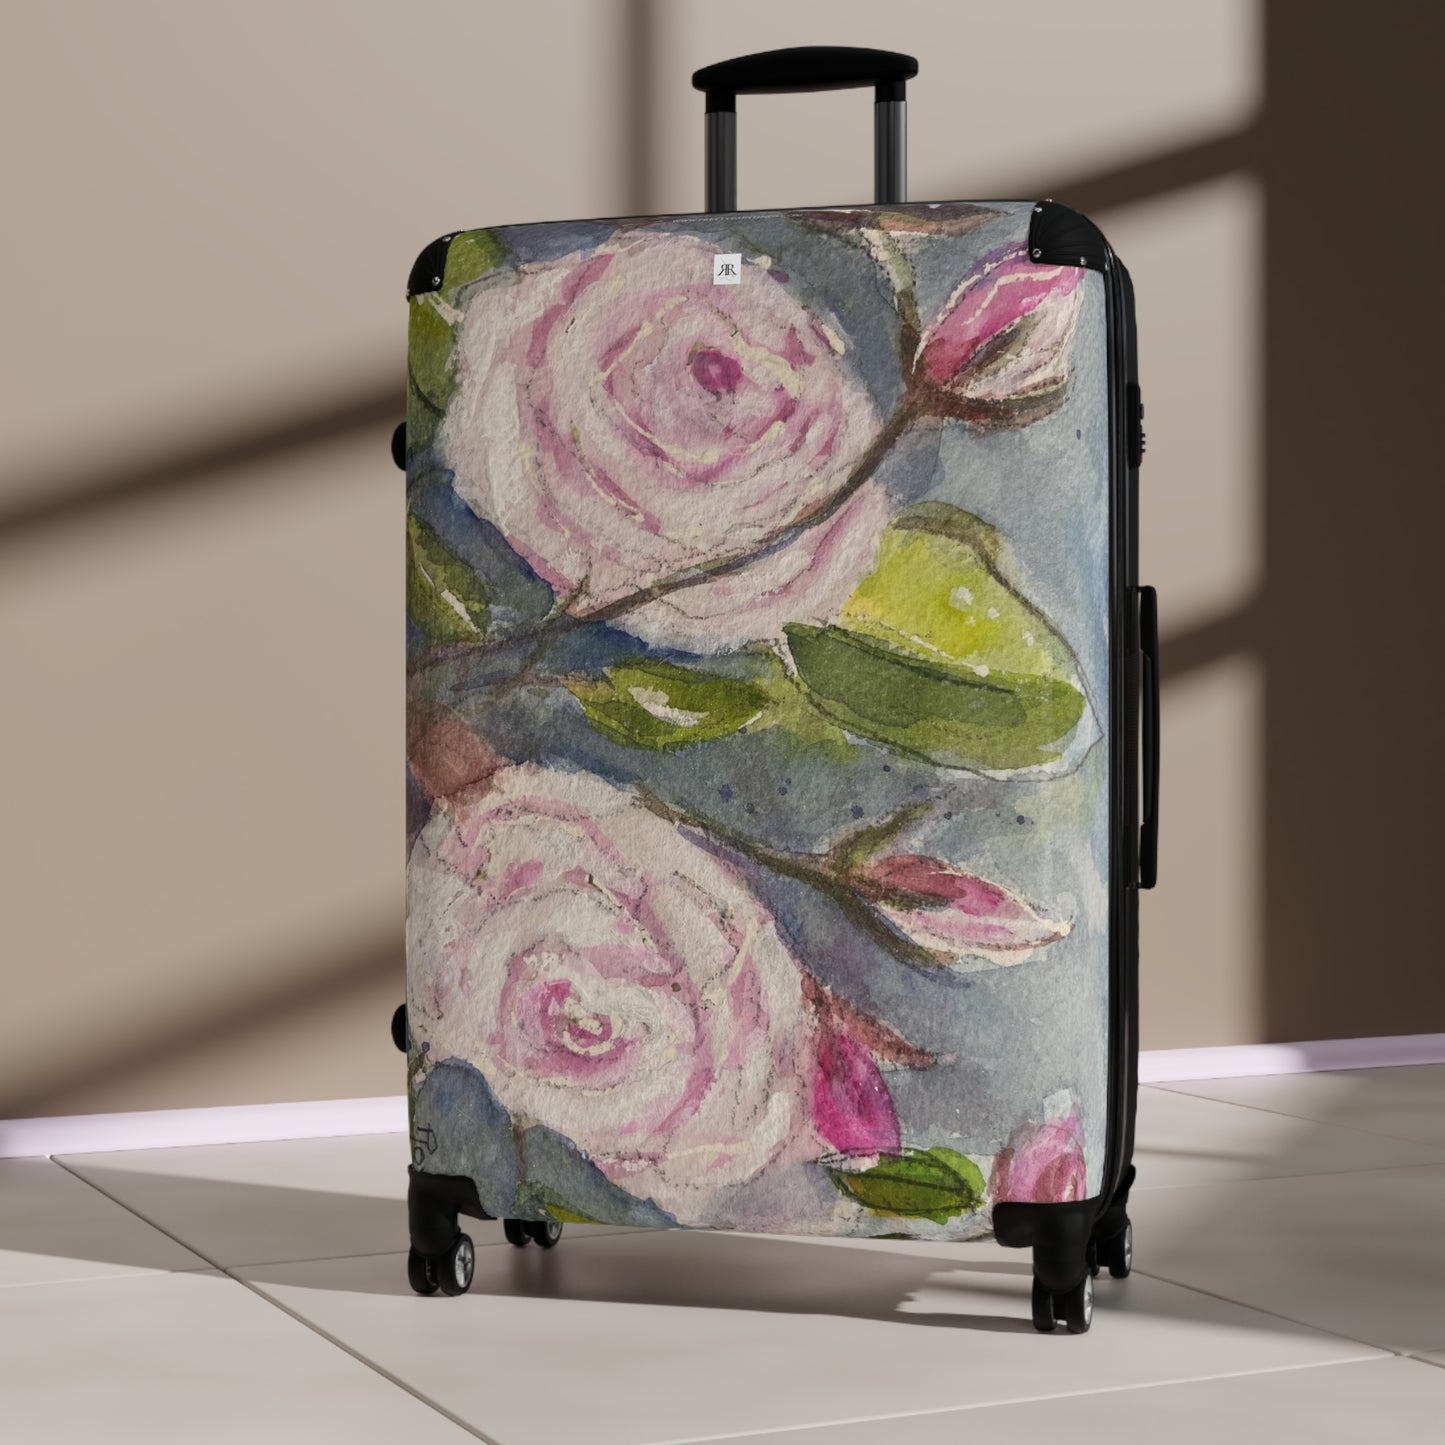 Valise à main avec roses blanches moelleuses 